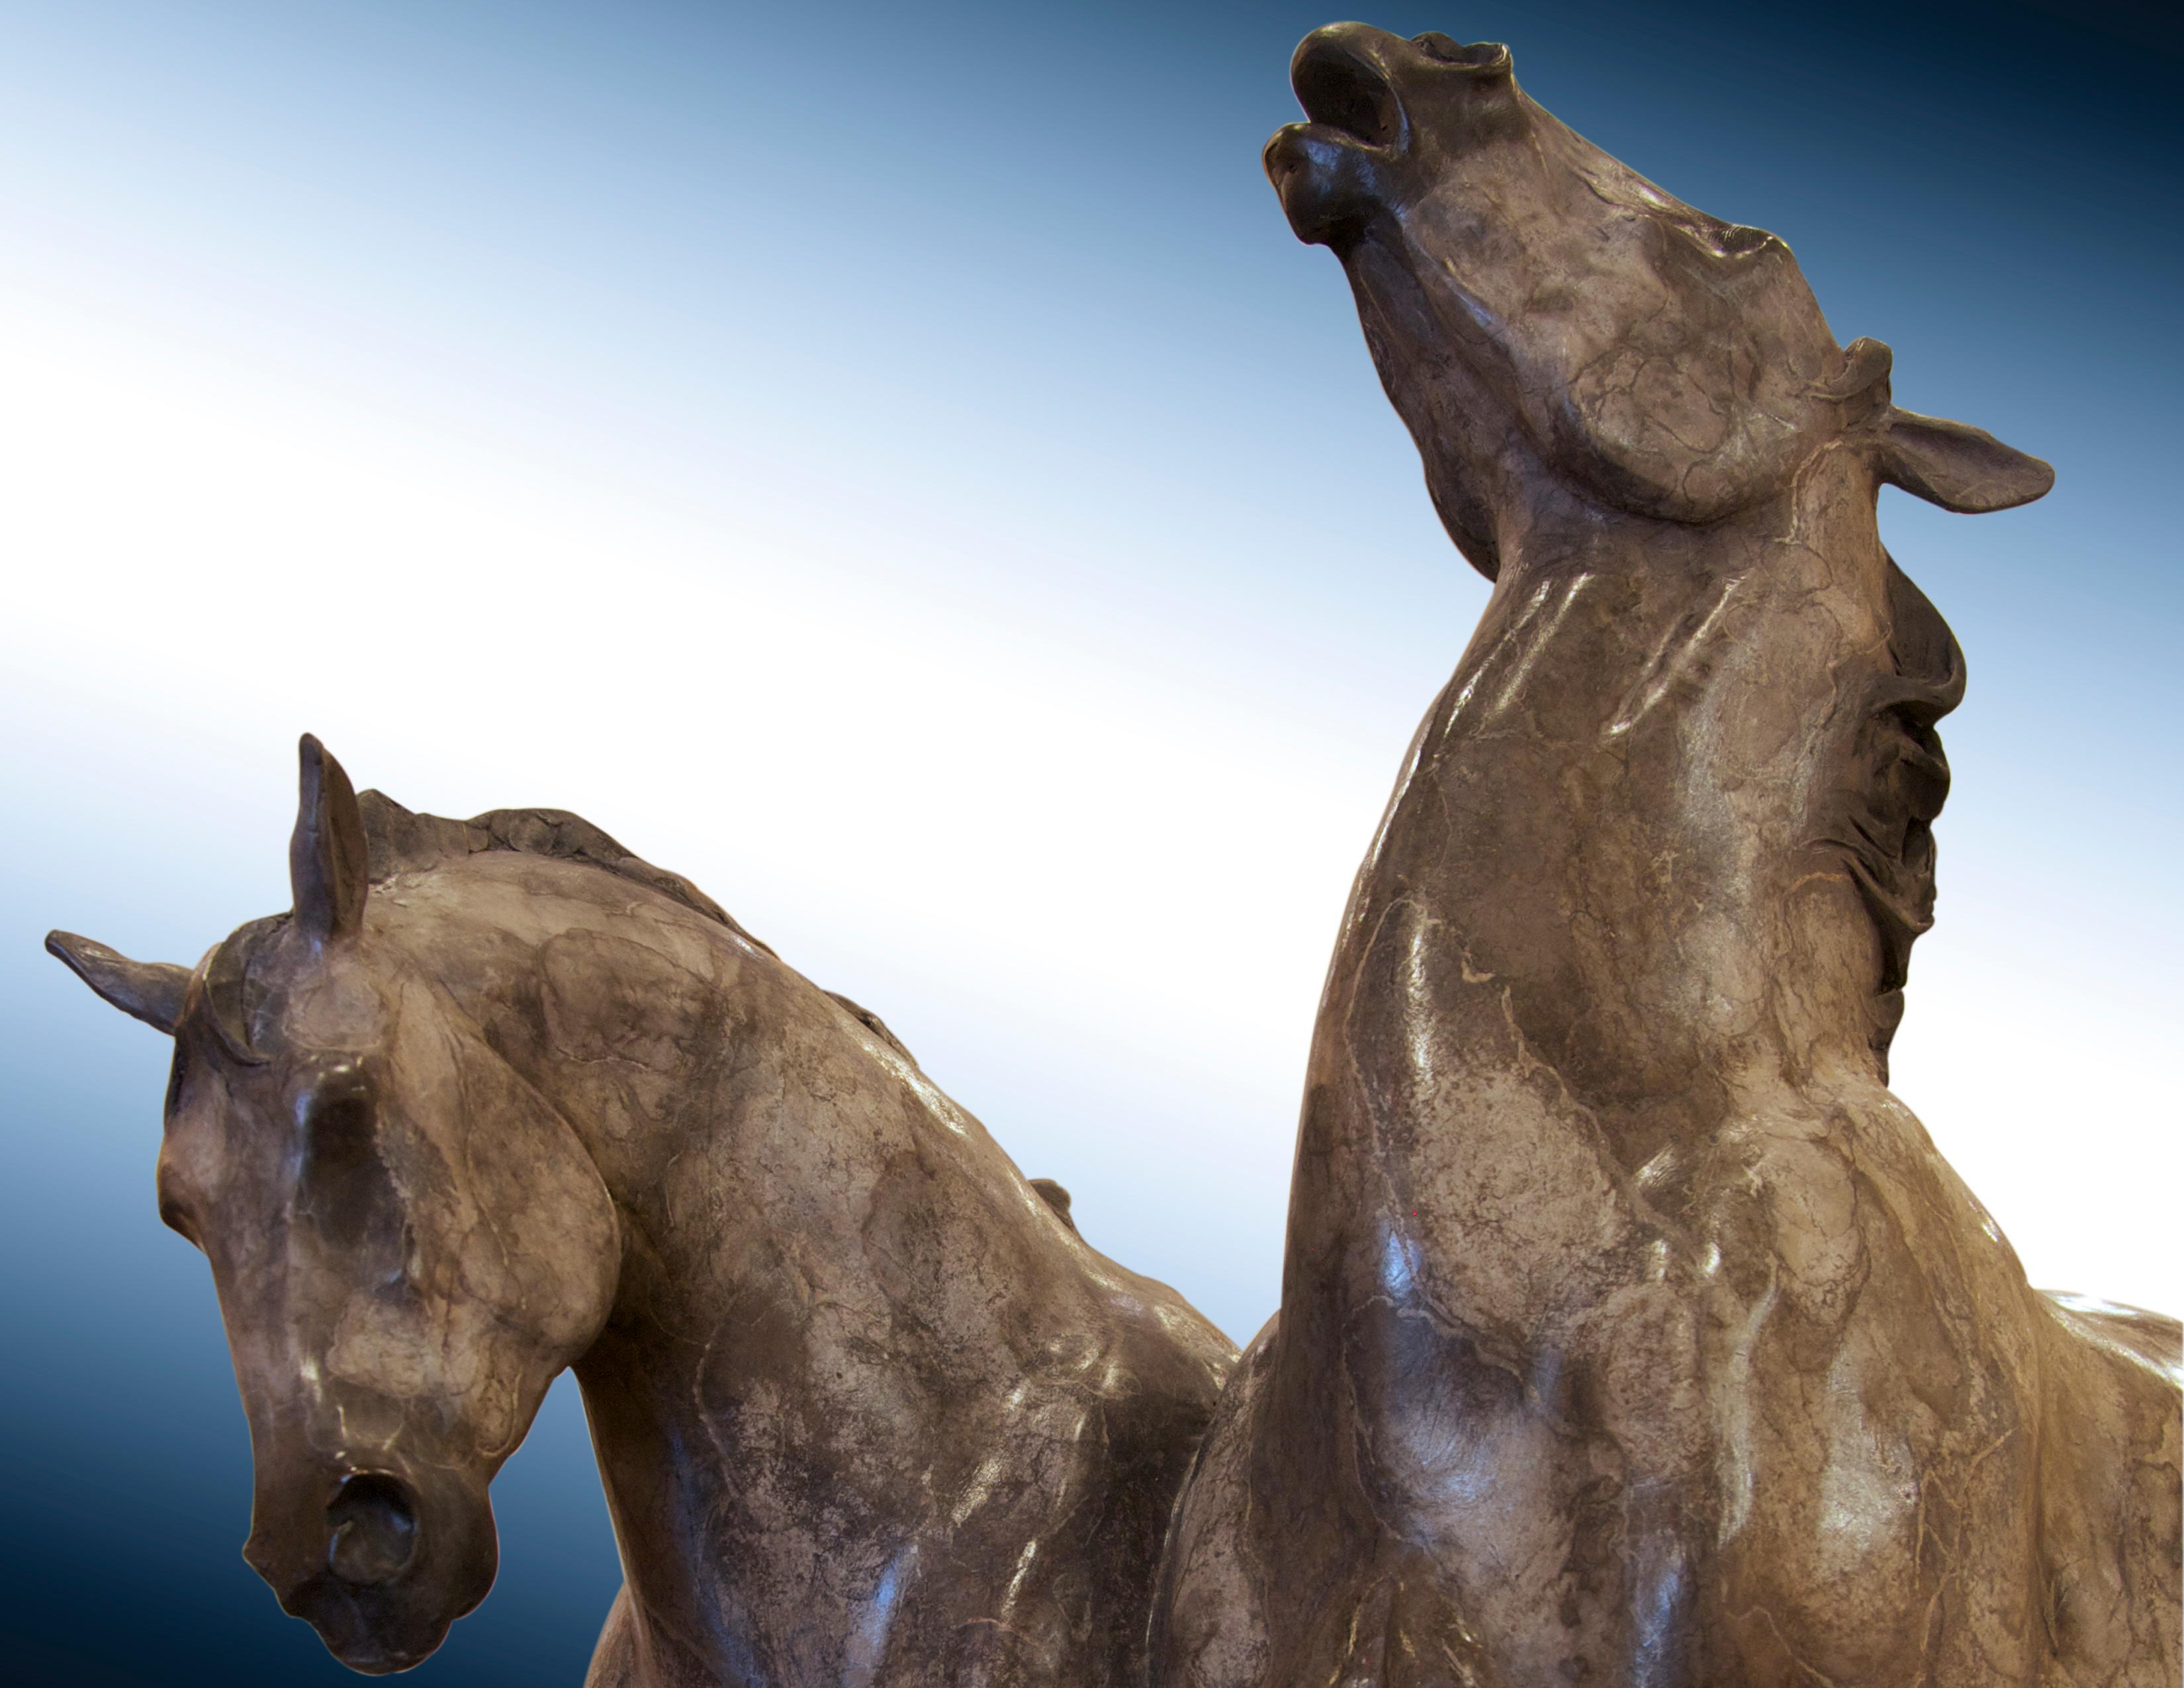 Bronze Horse Sculpture, 